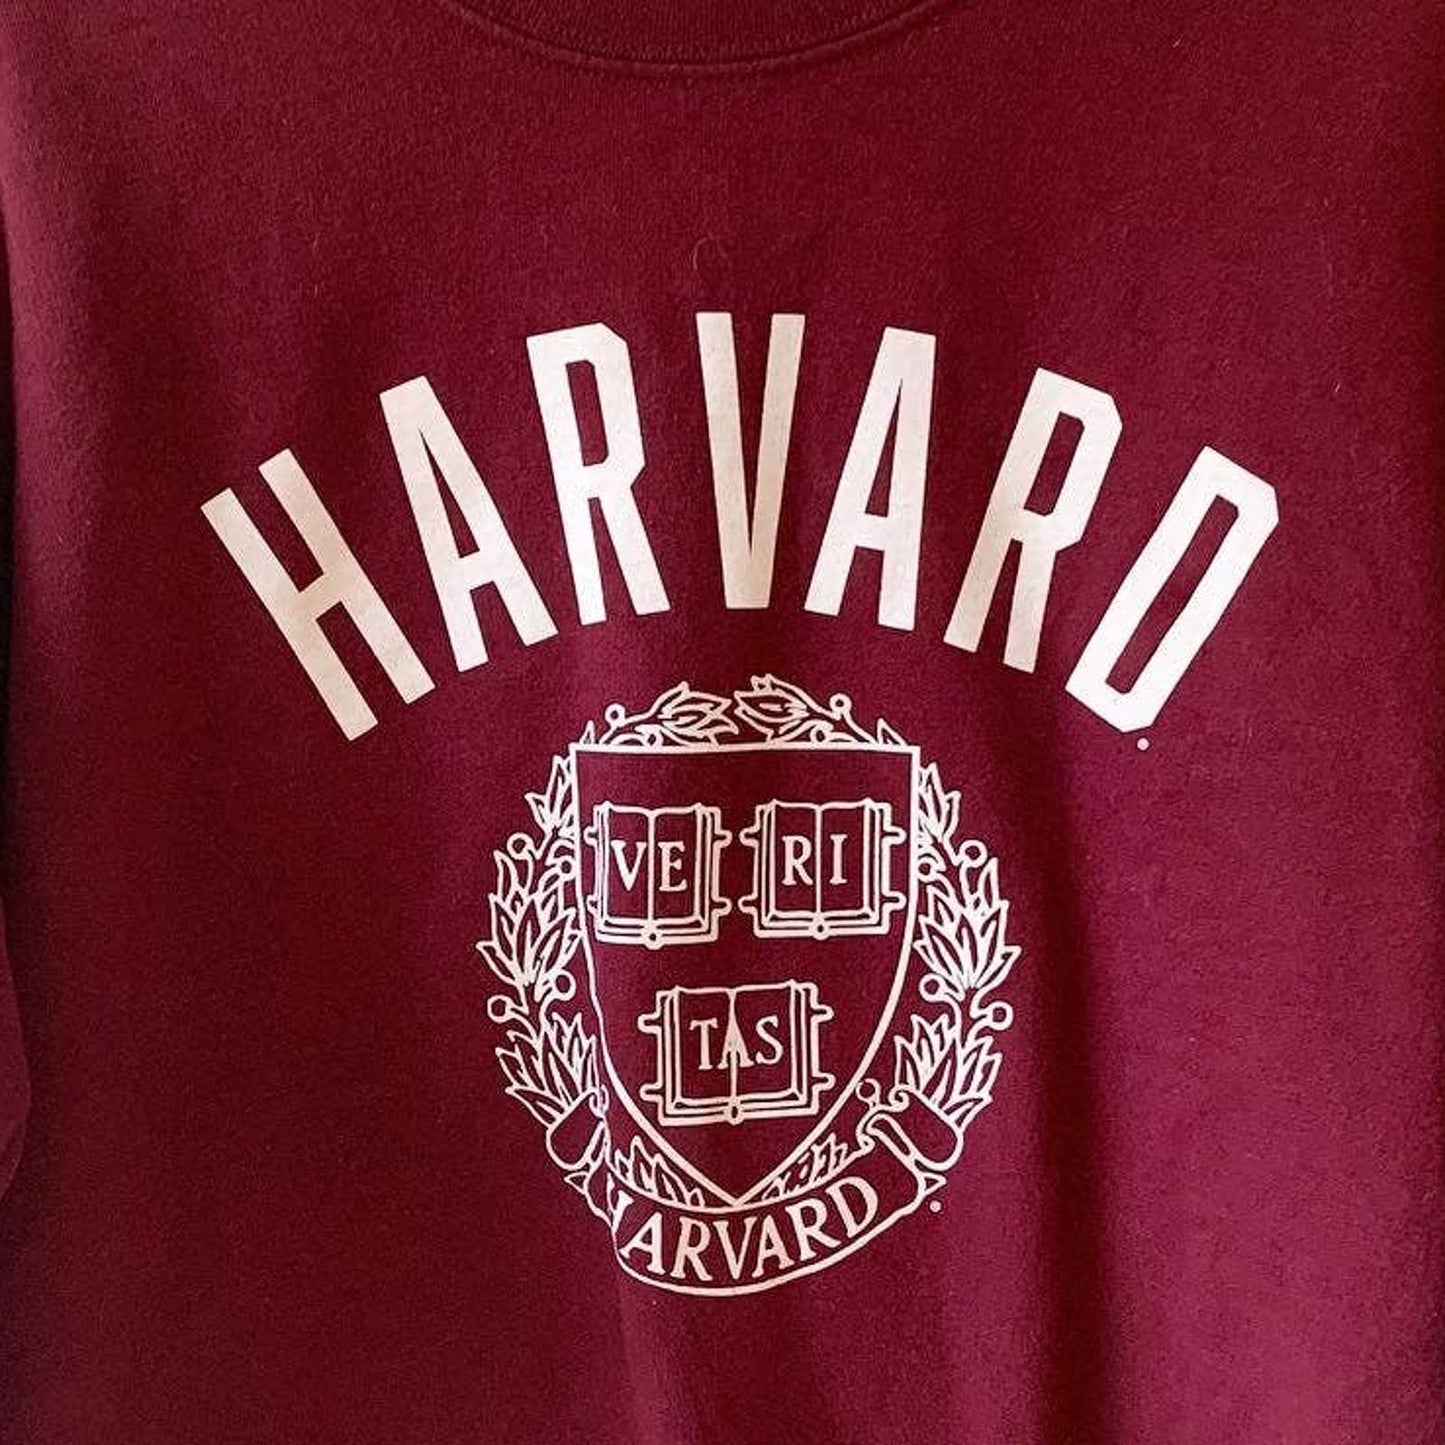 Ivysport Harvard University Crew Neck Maroon Sweatshirt